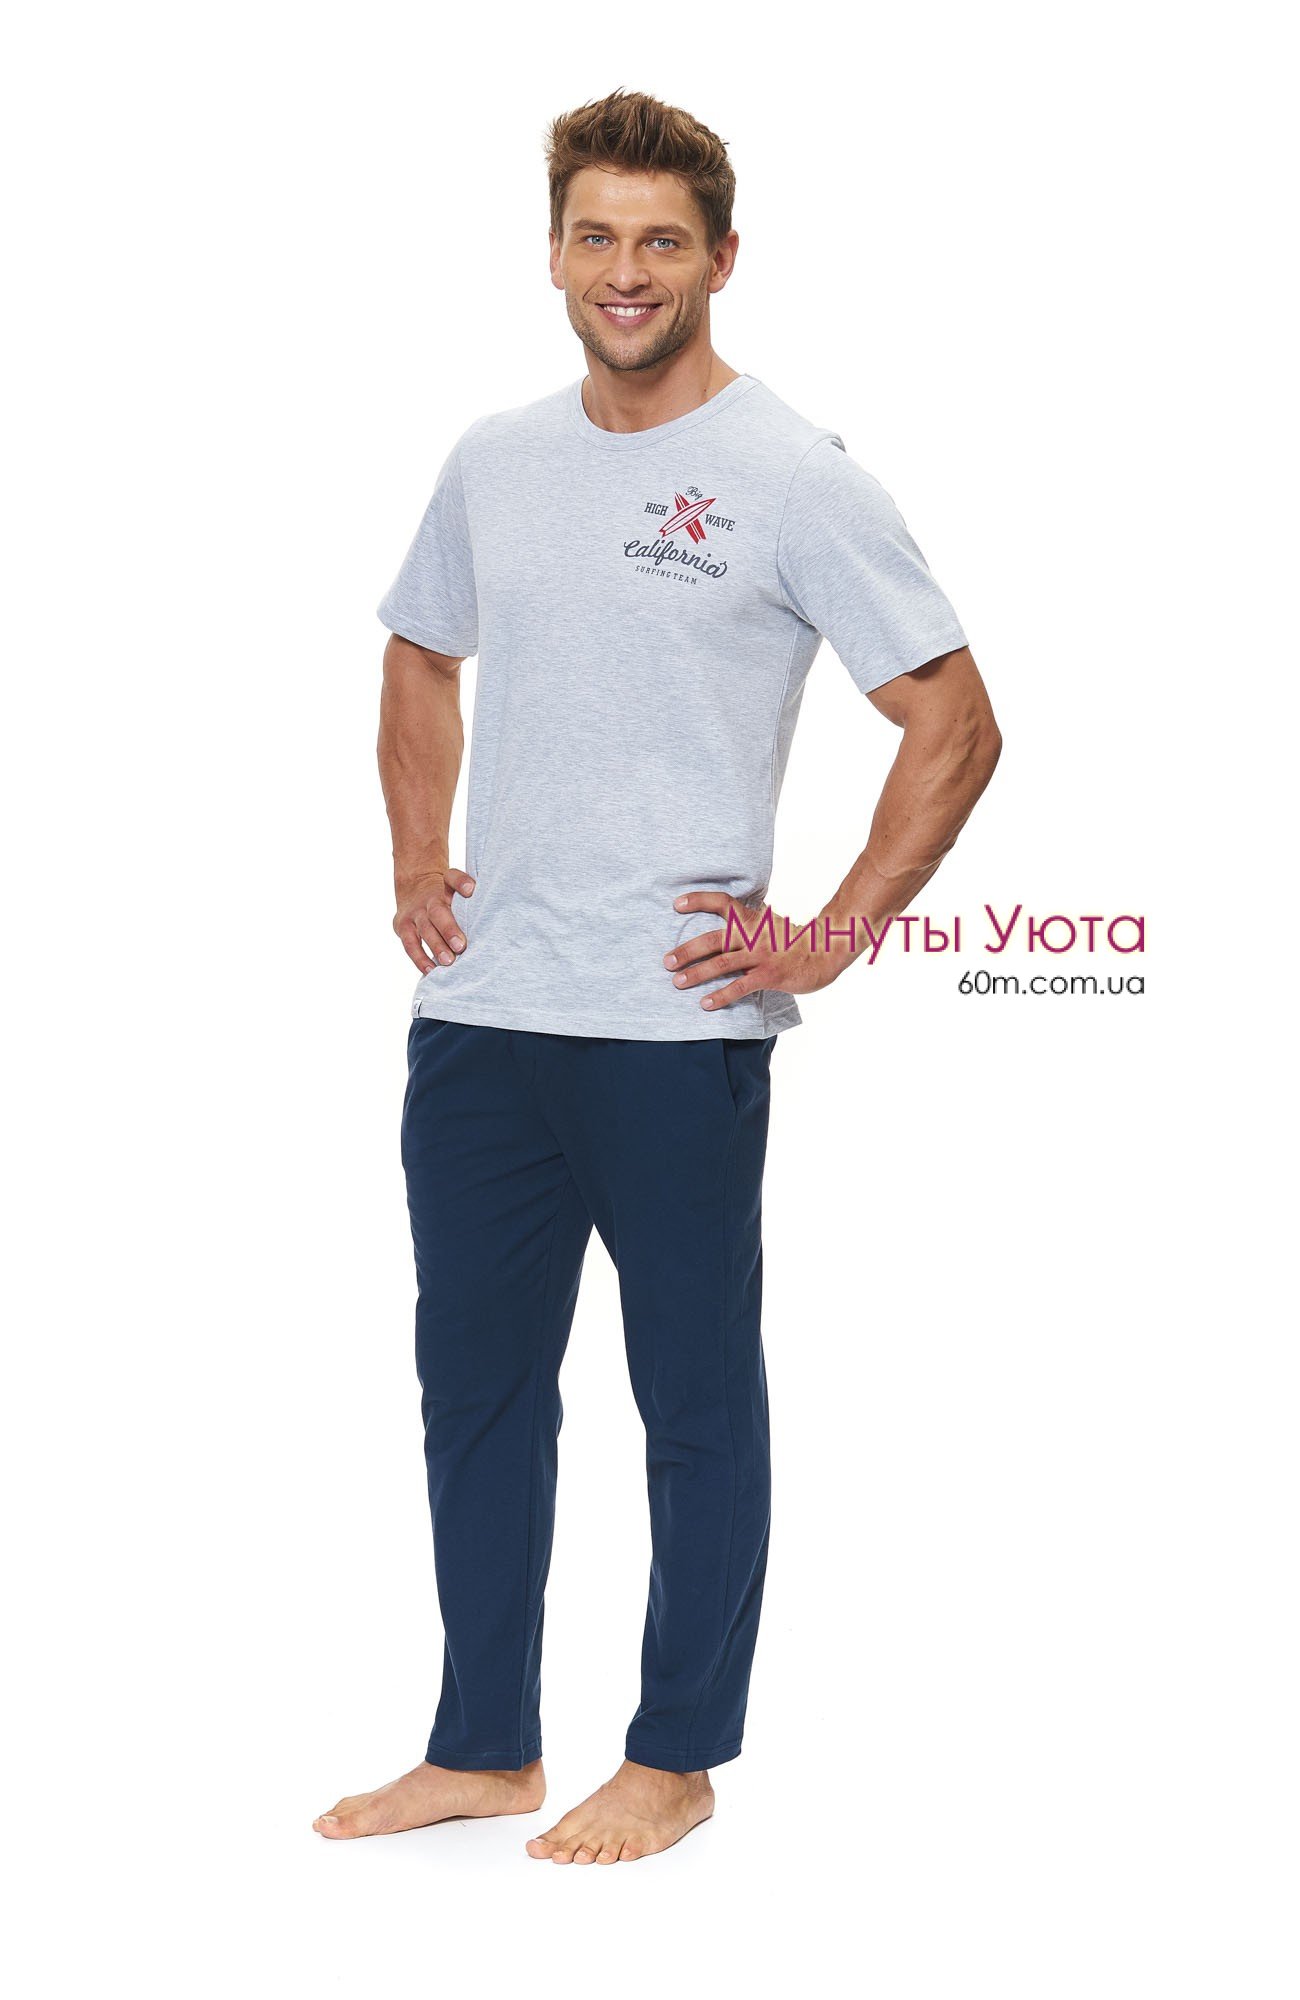 Серый комплект для дома футболка и брюки  Dobra Nochka